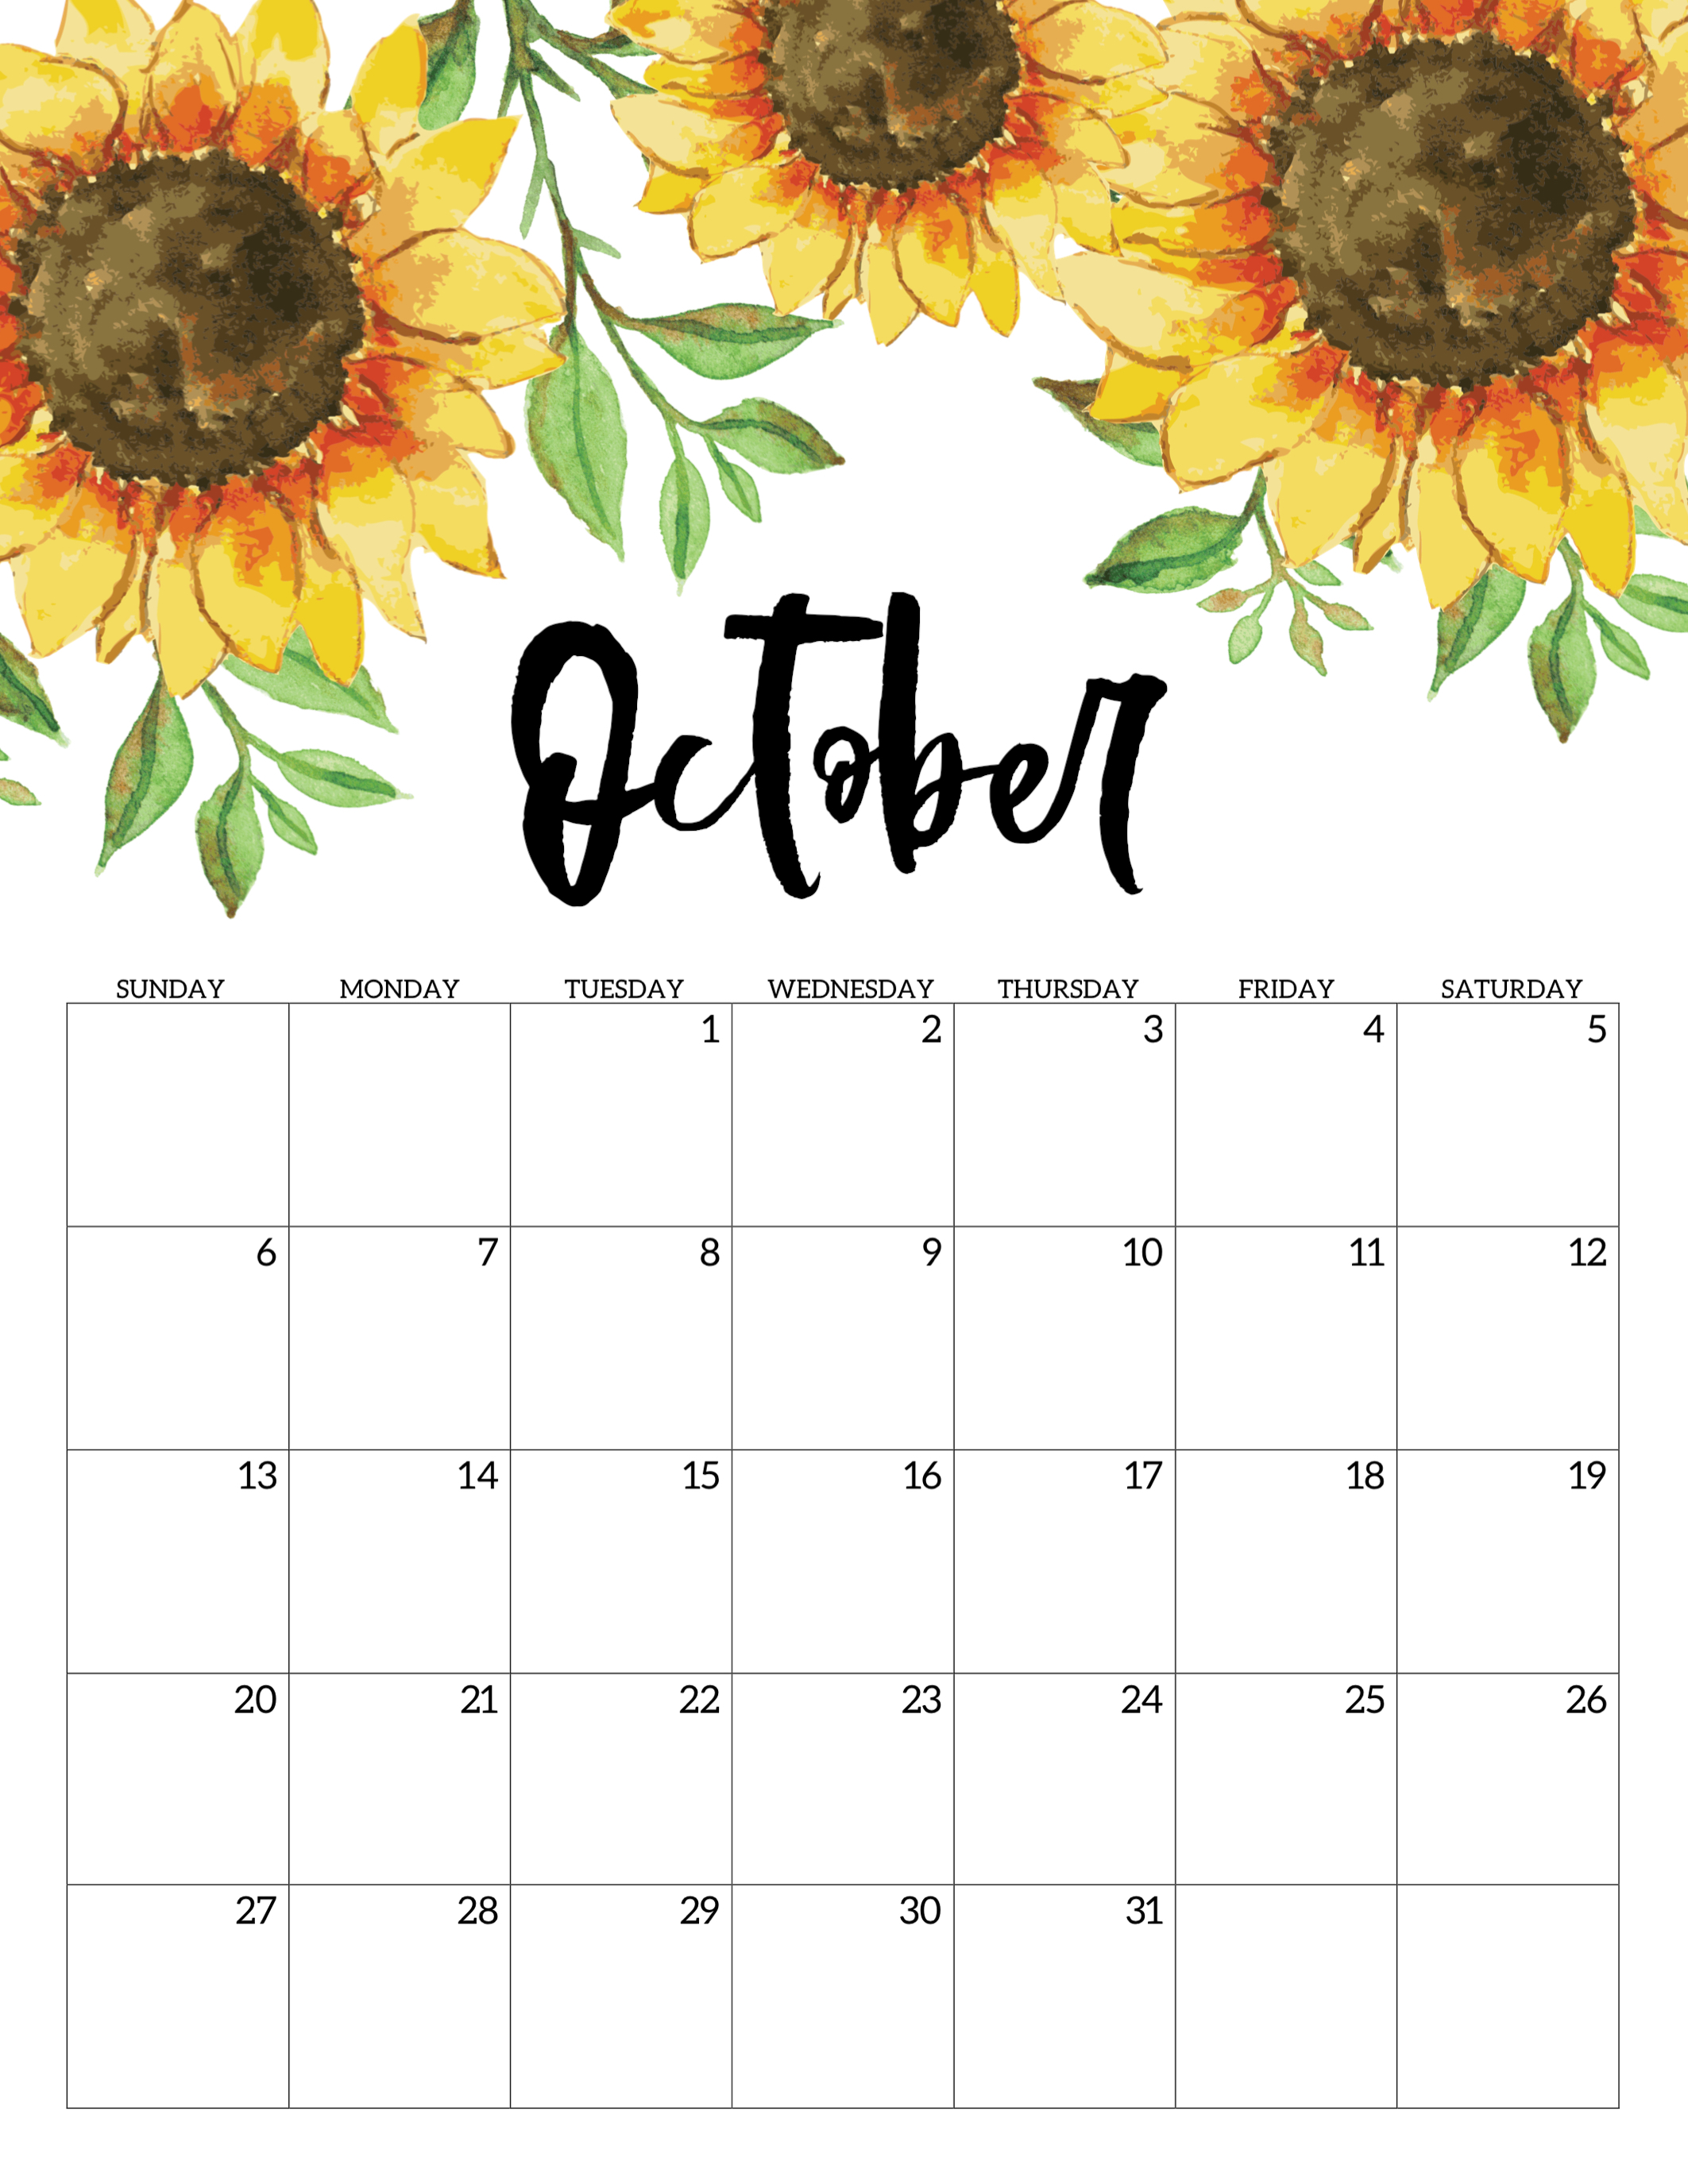 free-printable-calendar-2019-floral-paper-trail-design